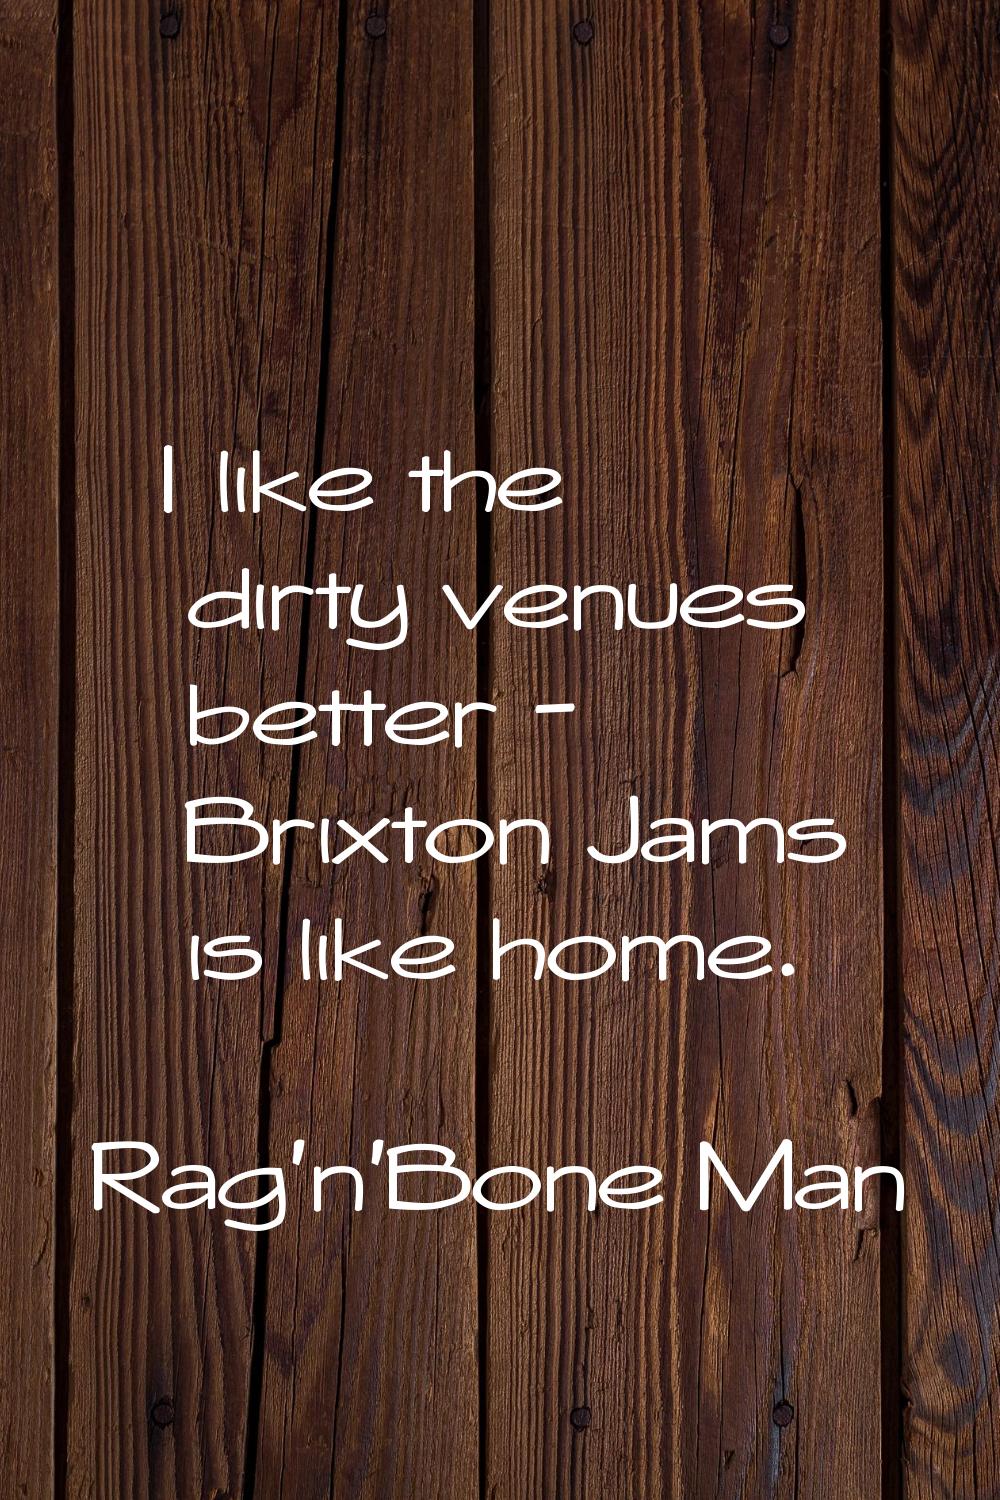 I like the dirty venues better - Brixton Jams is like home.